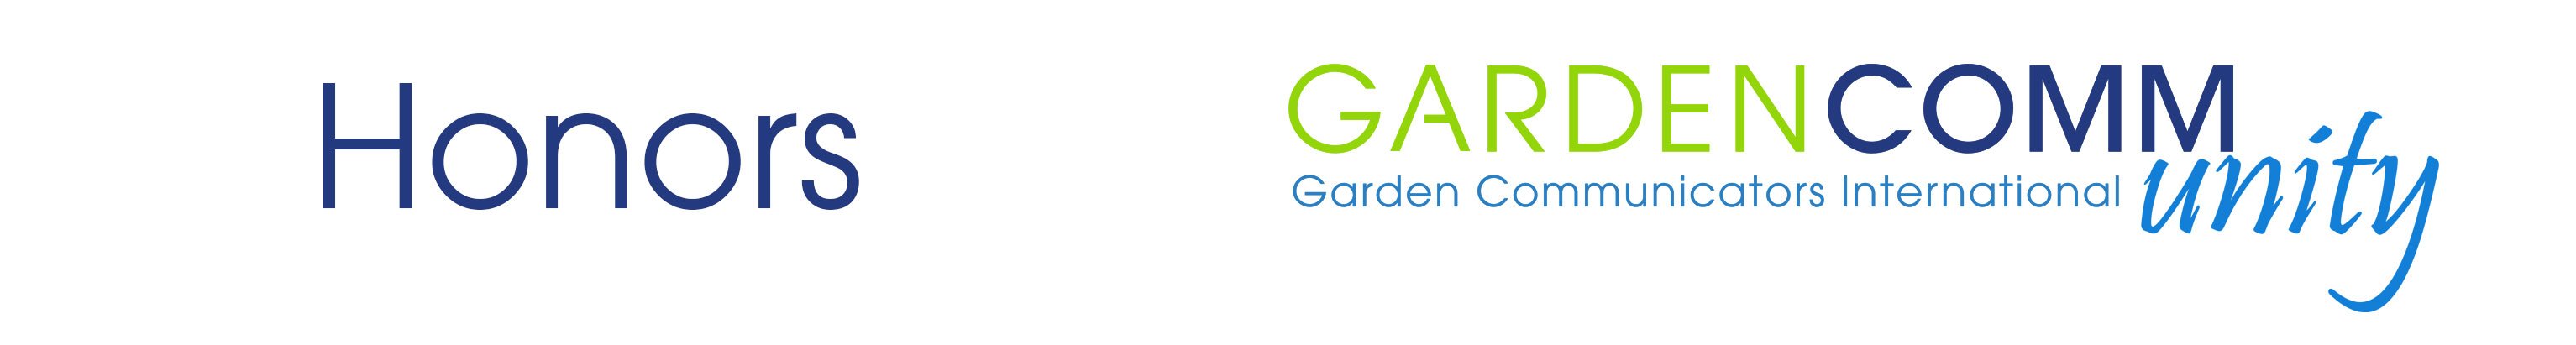 GardenComm_unity_w-tag-Honors-1